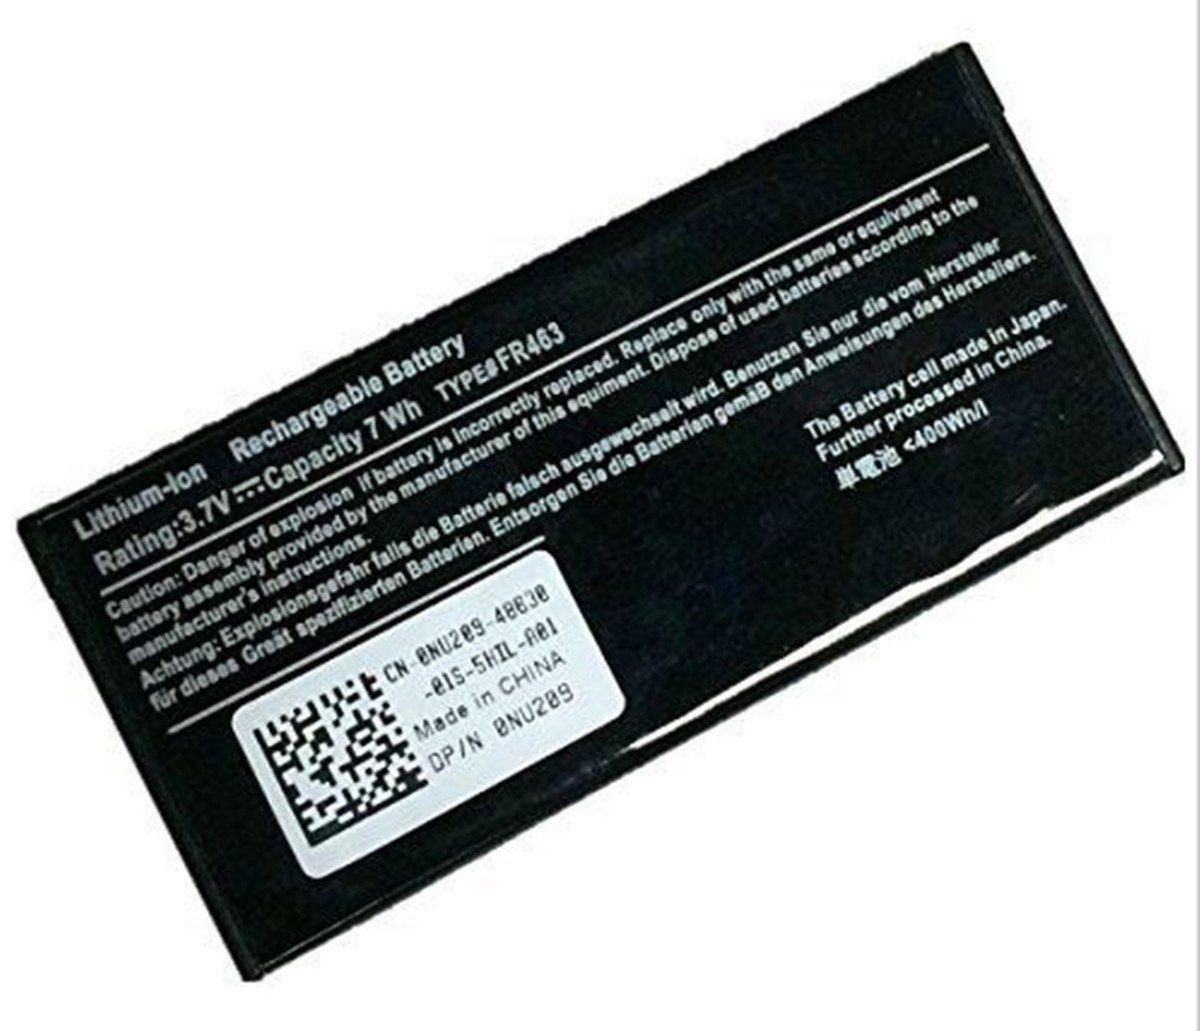 Dell PowerEdge 2900 battery